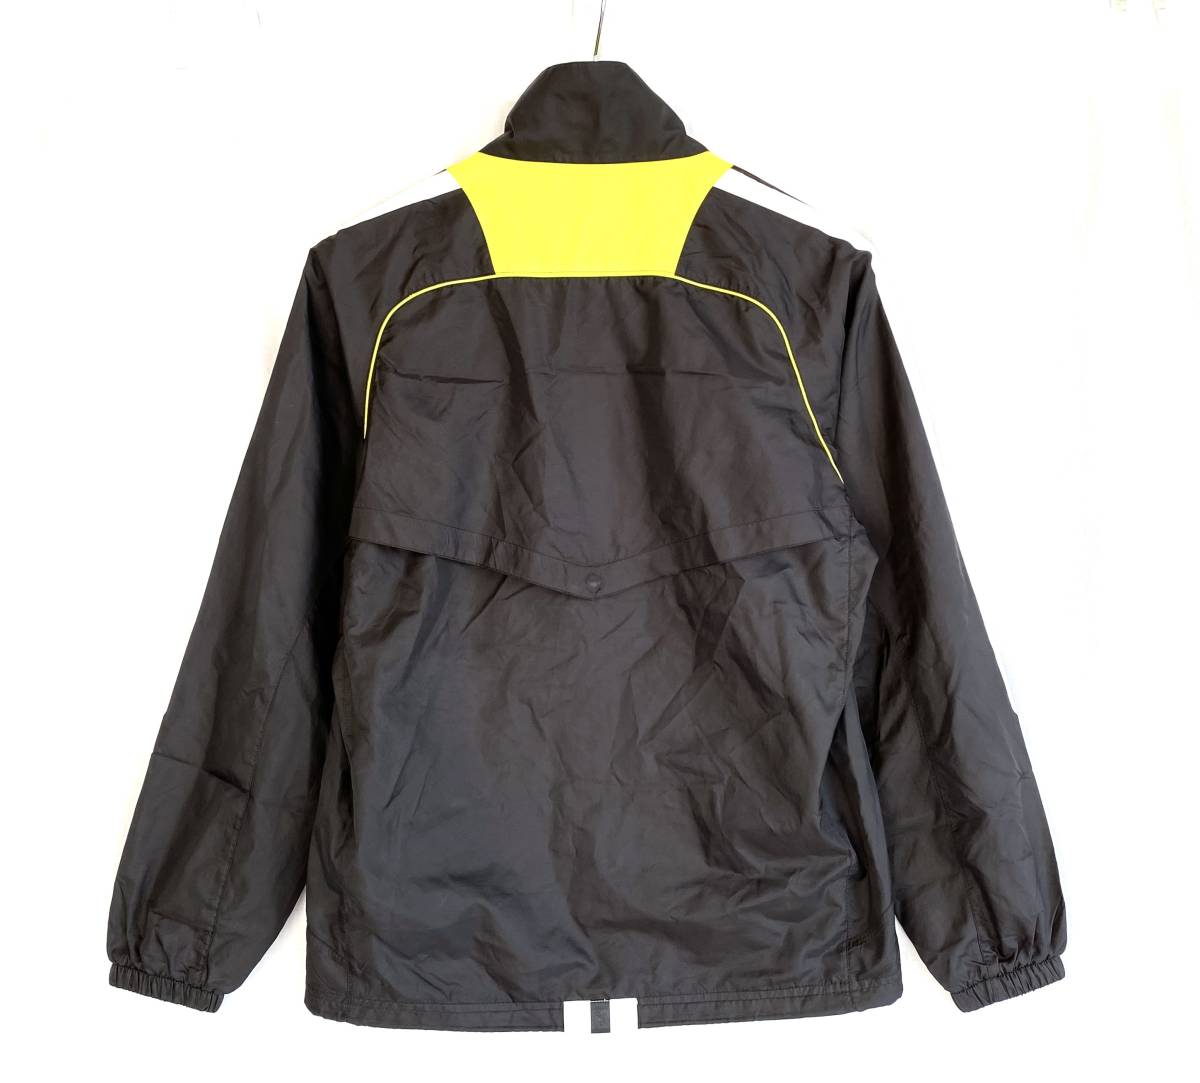  beautiful goods BabolaT Babolat nylon jacket men's S black neon sleeve Logo print full Zip high‐necked Descente tennis outer light weight D463